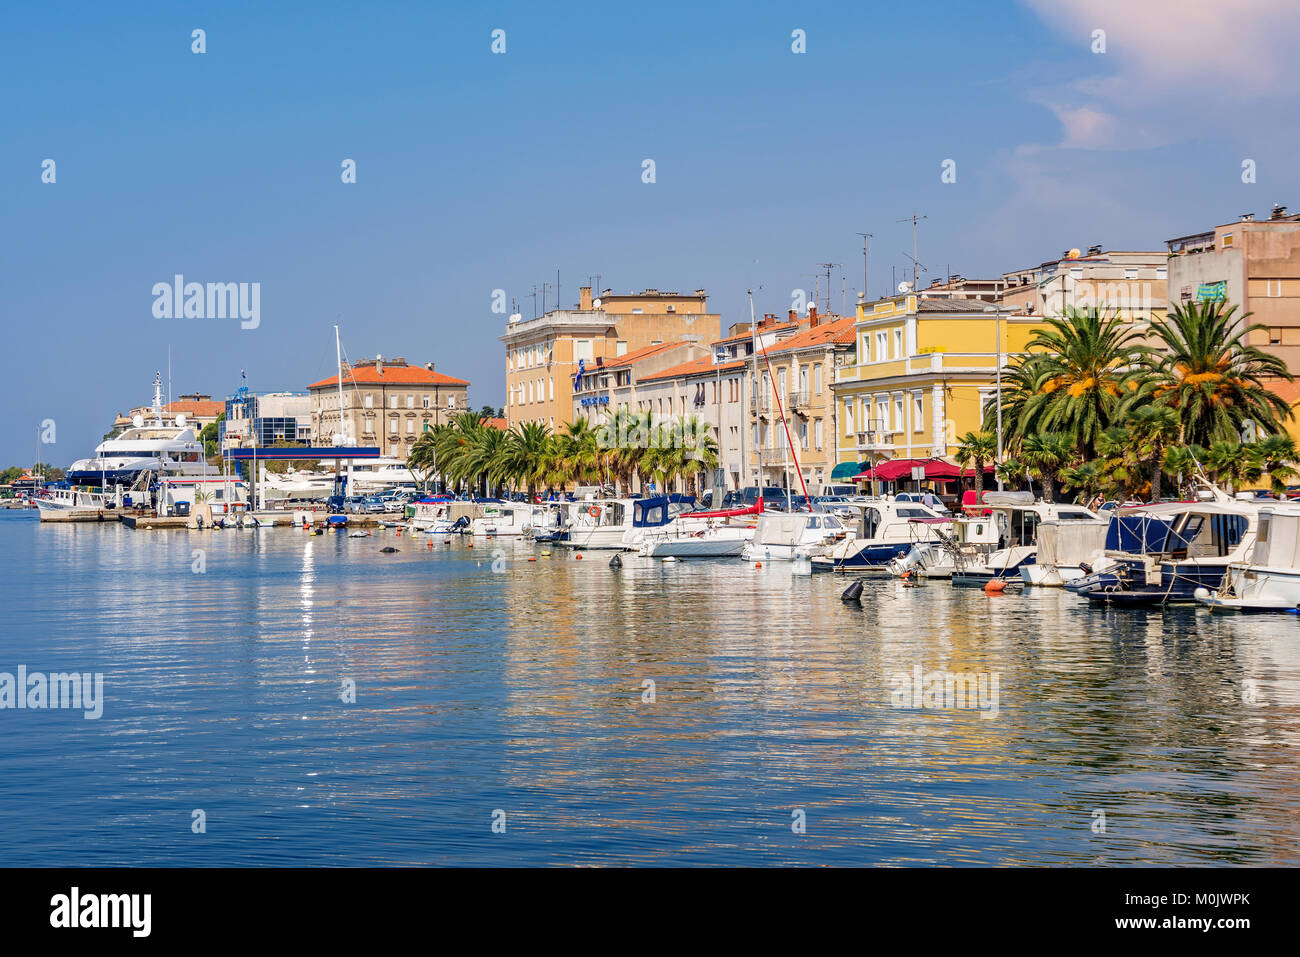 ZADAR, CROATIA - SEPTEMBER 14: View of the Zadar waterfront ...